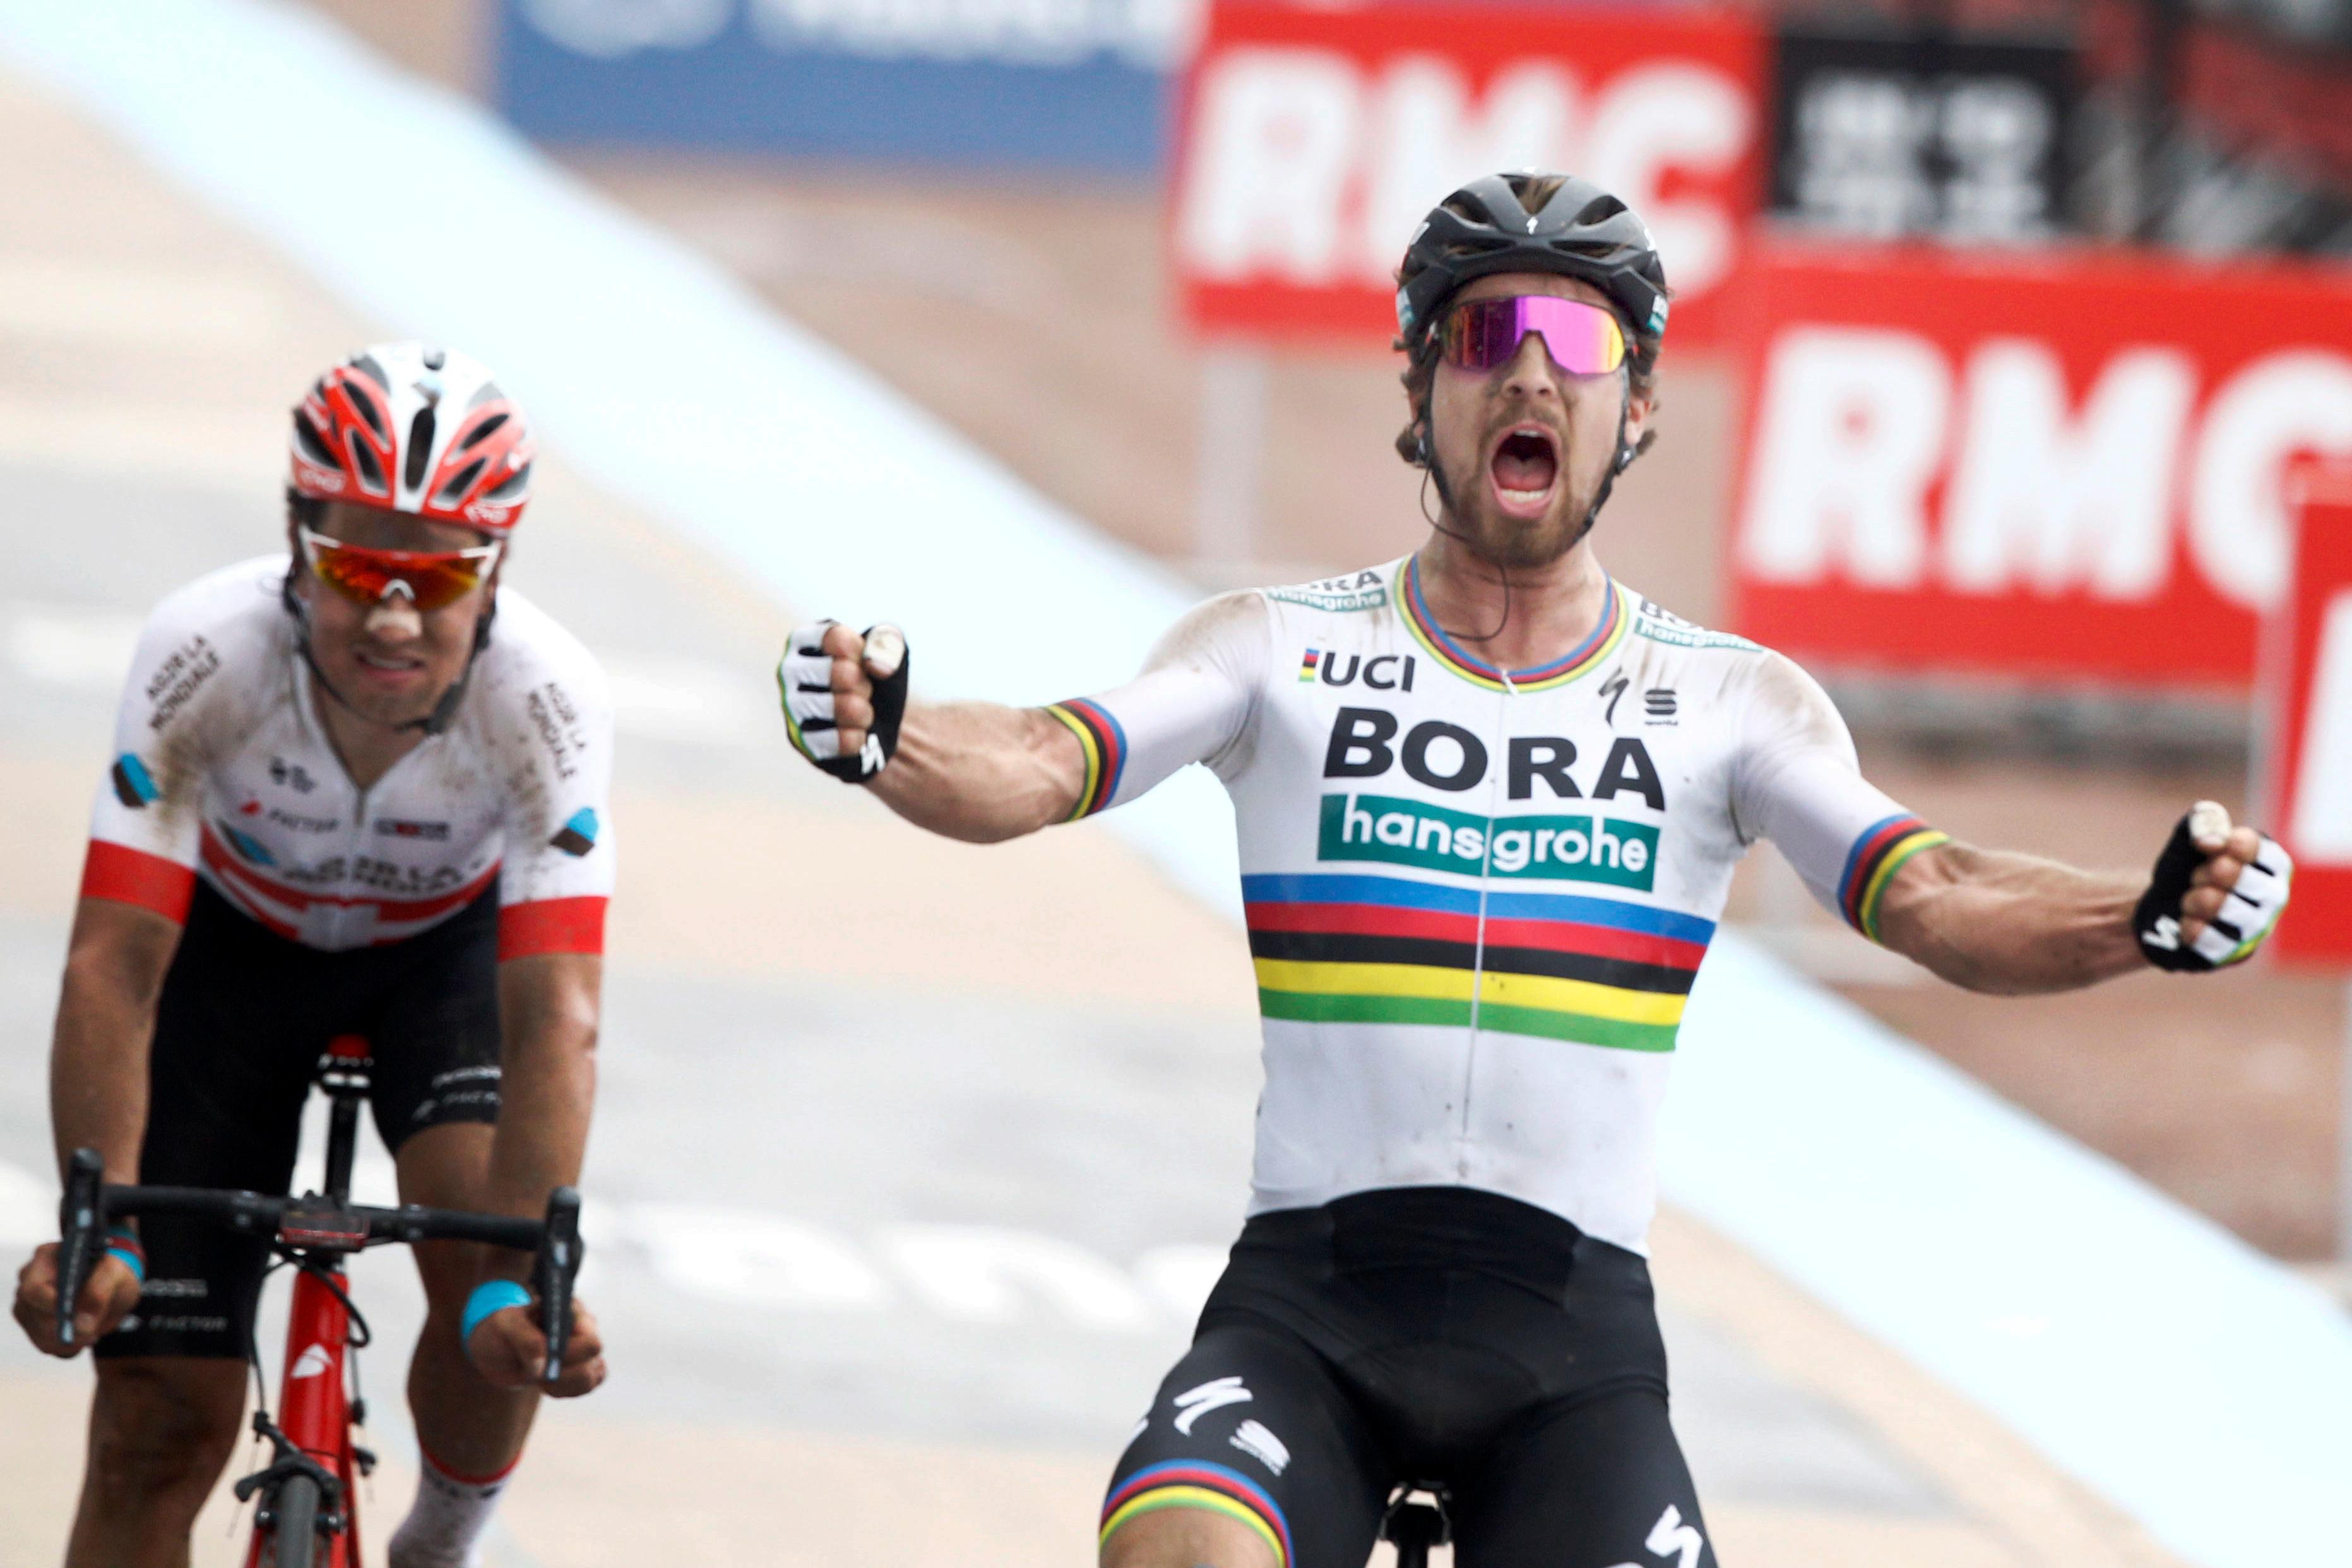 Peter Sagan’s 1st Paris-Roubaix win overshadowed by rider’s death | The ...